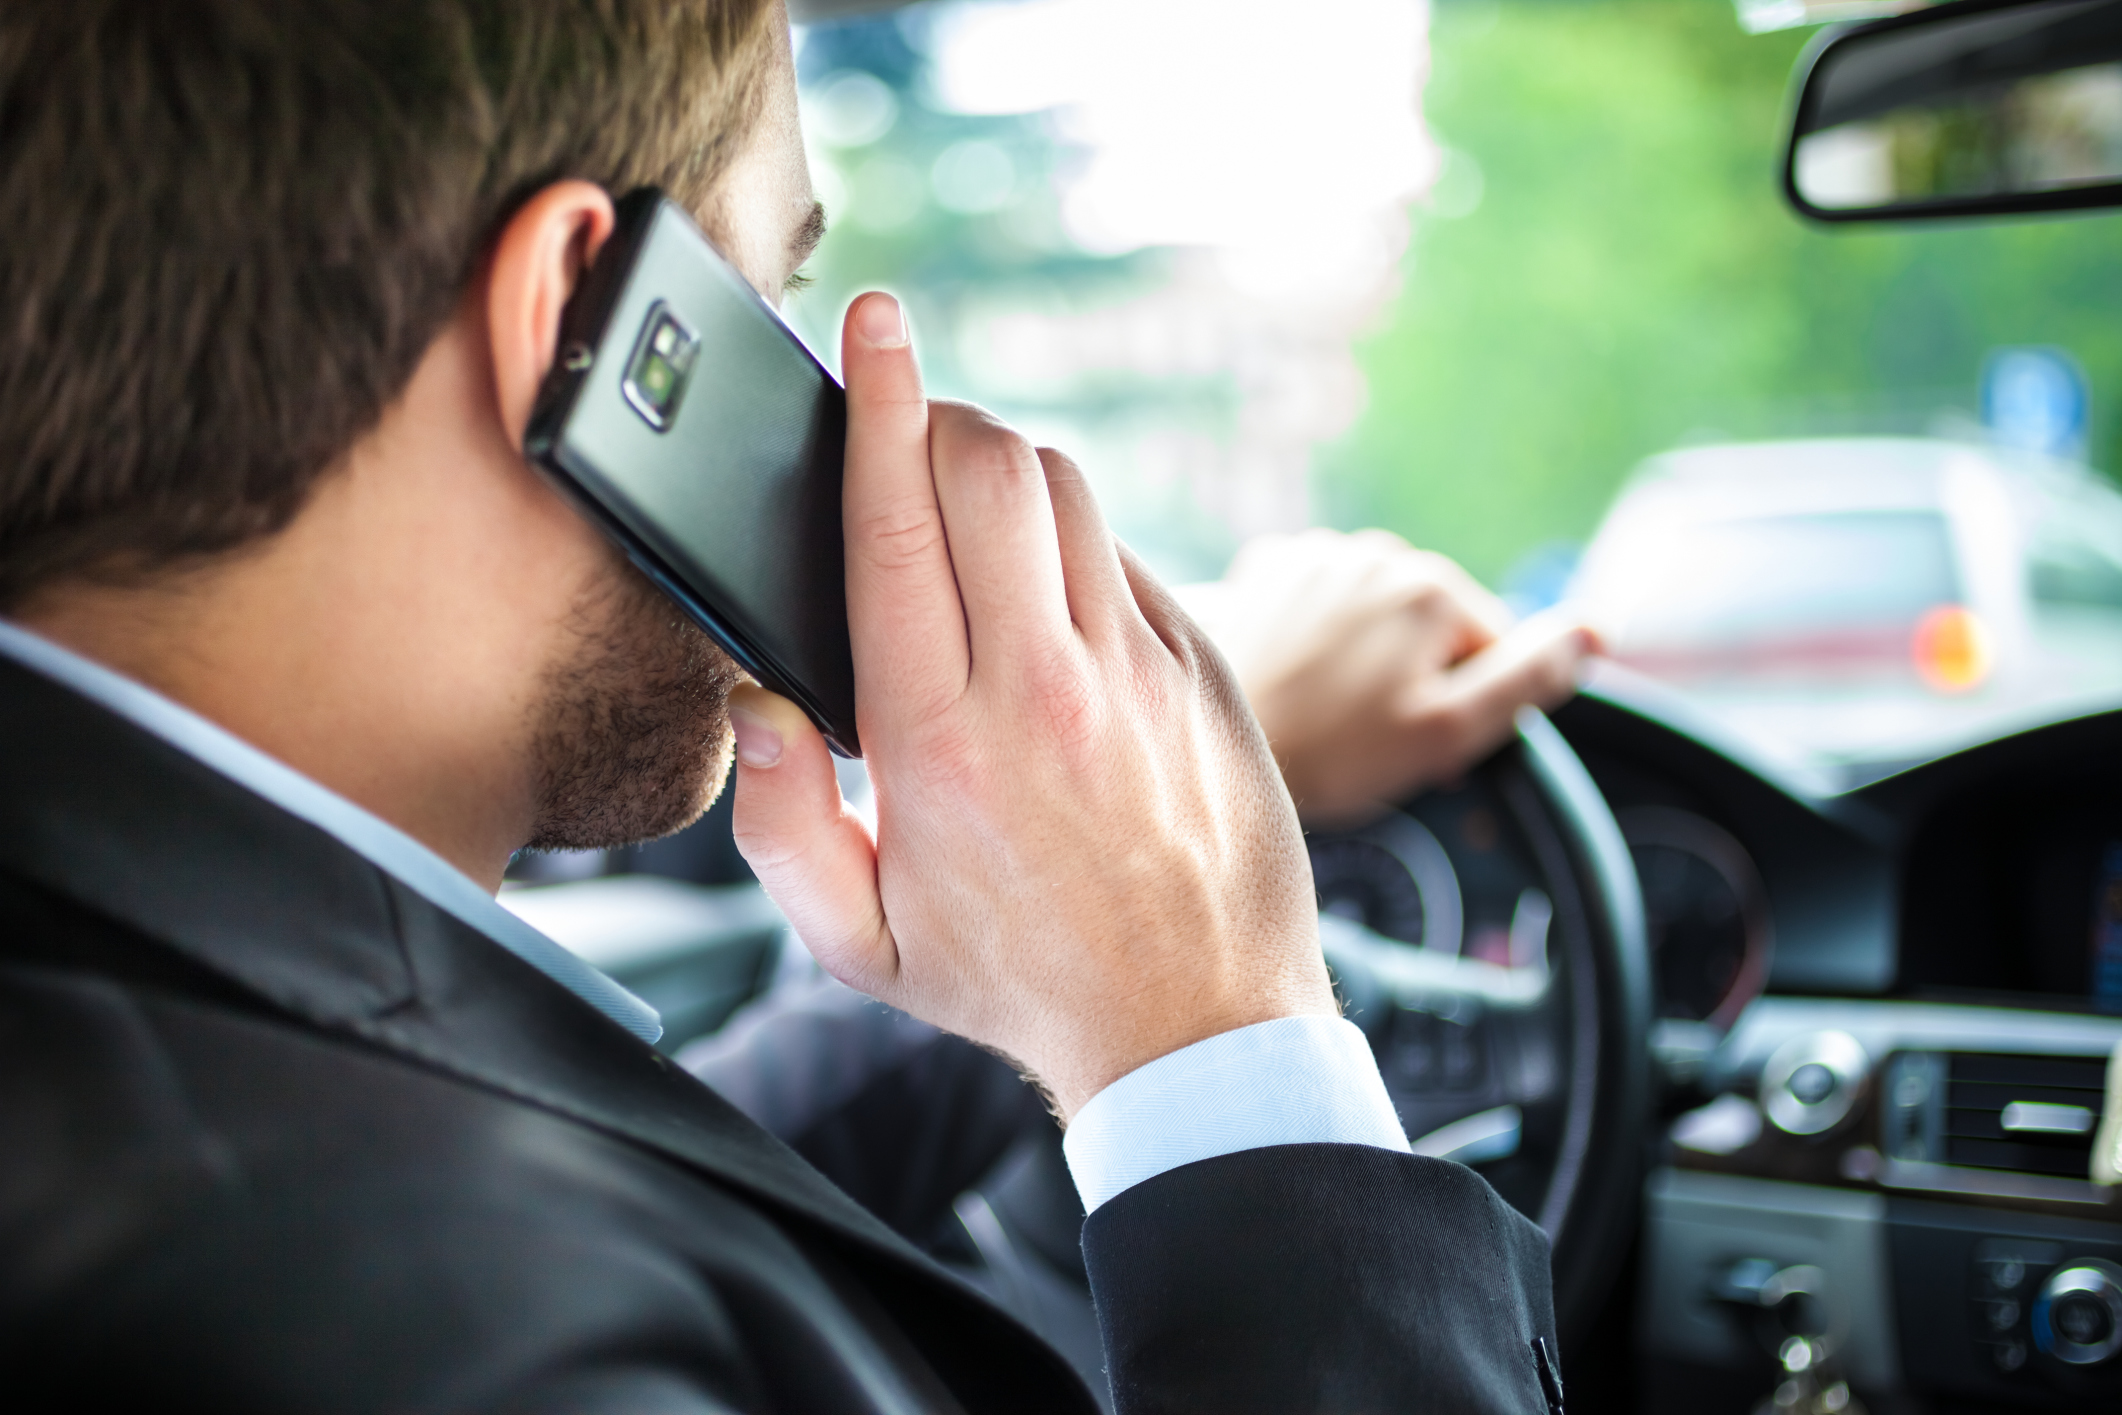 Va. transportation officials: Distracted driving an ‘epidemic’